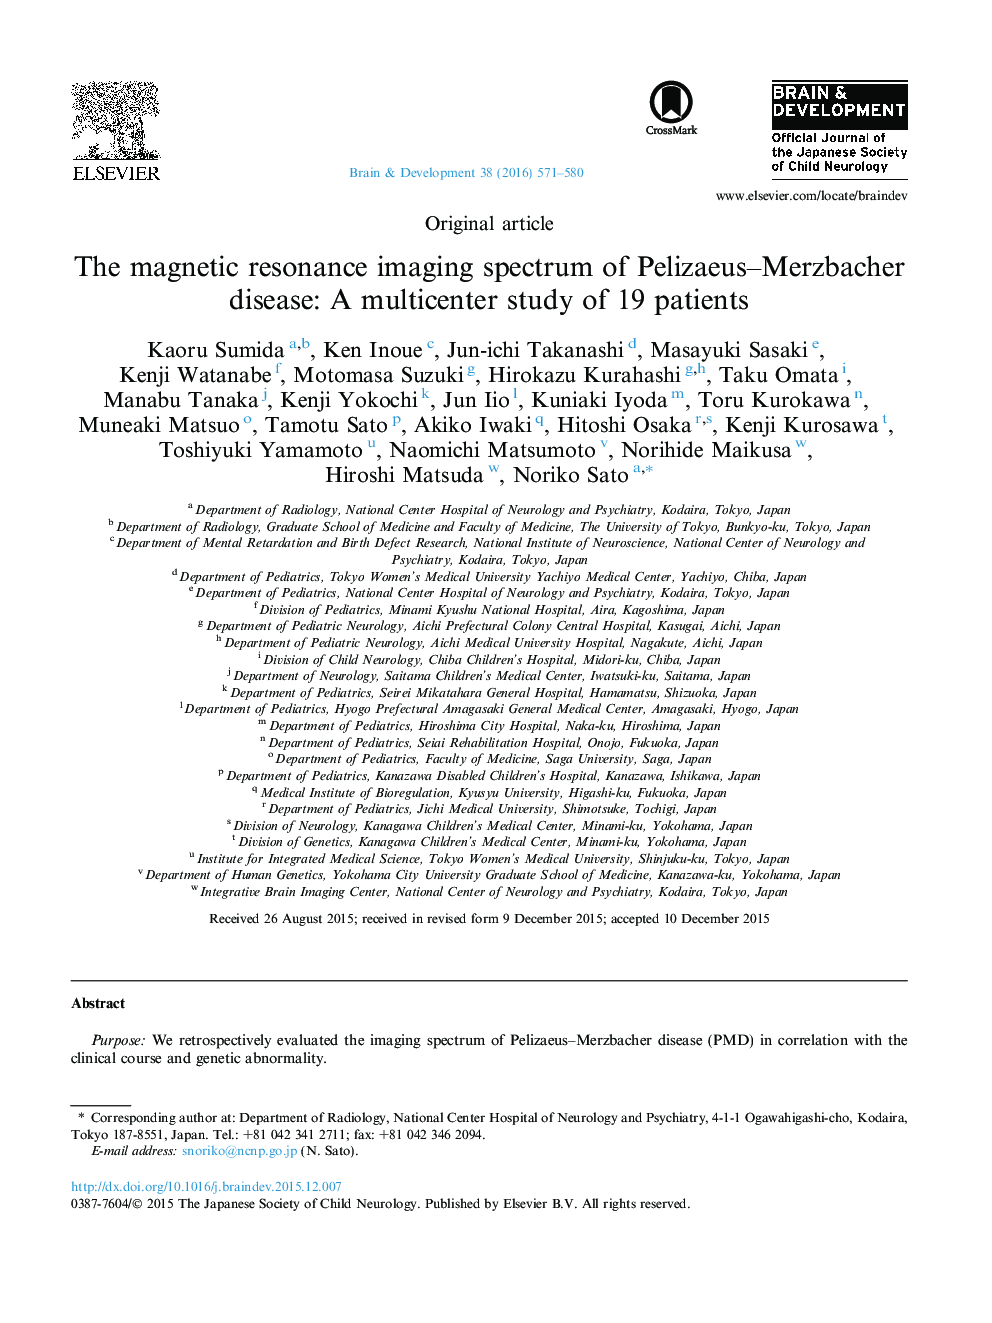 The magnetic resonance imaging spectrum of Pelizaeus–Merzbacher disease: A multicenter study of 19 patients